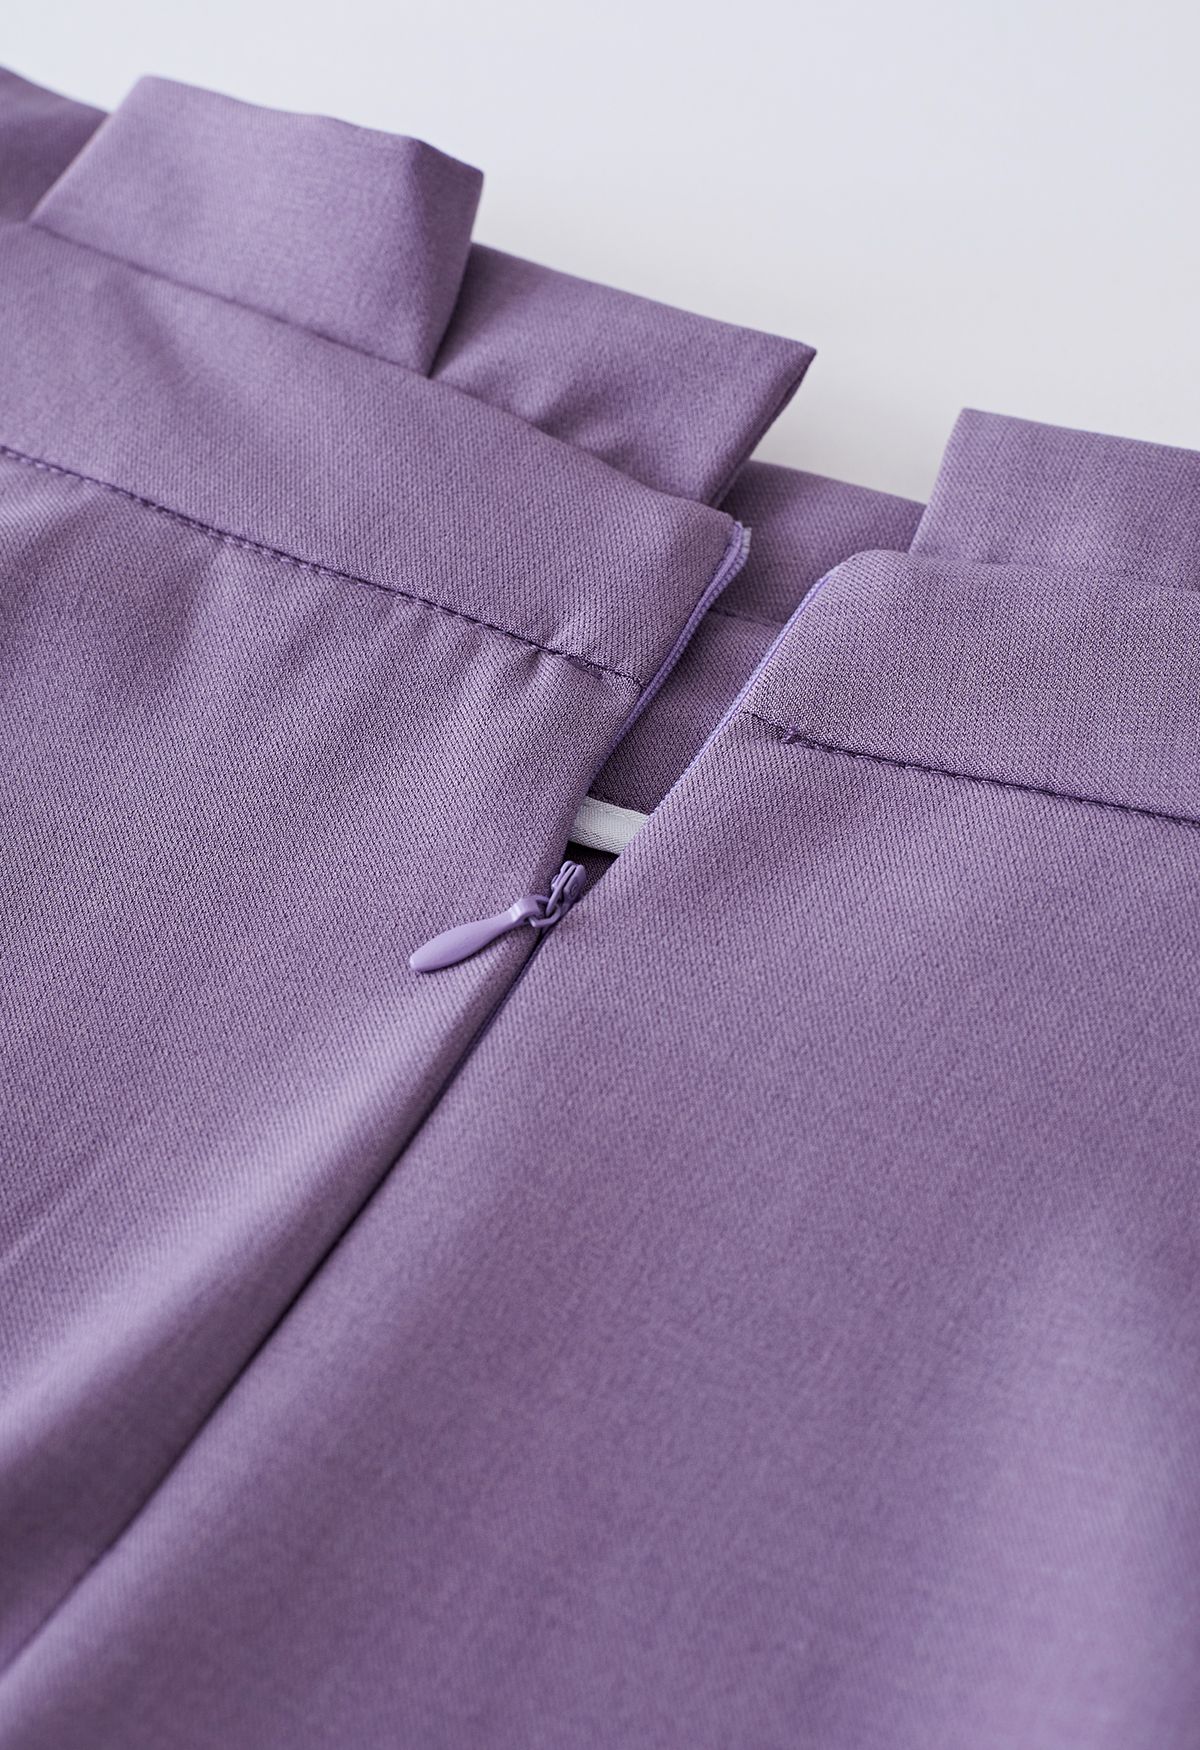 Falda midi plisada con cintura abotonada en lila